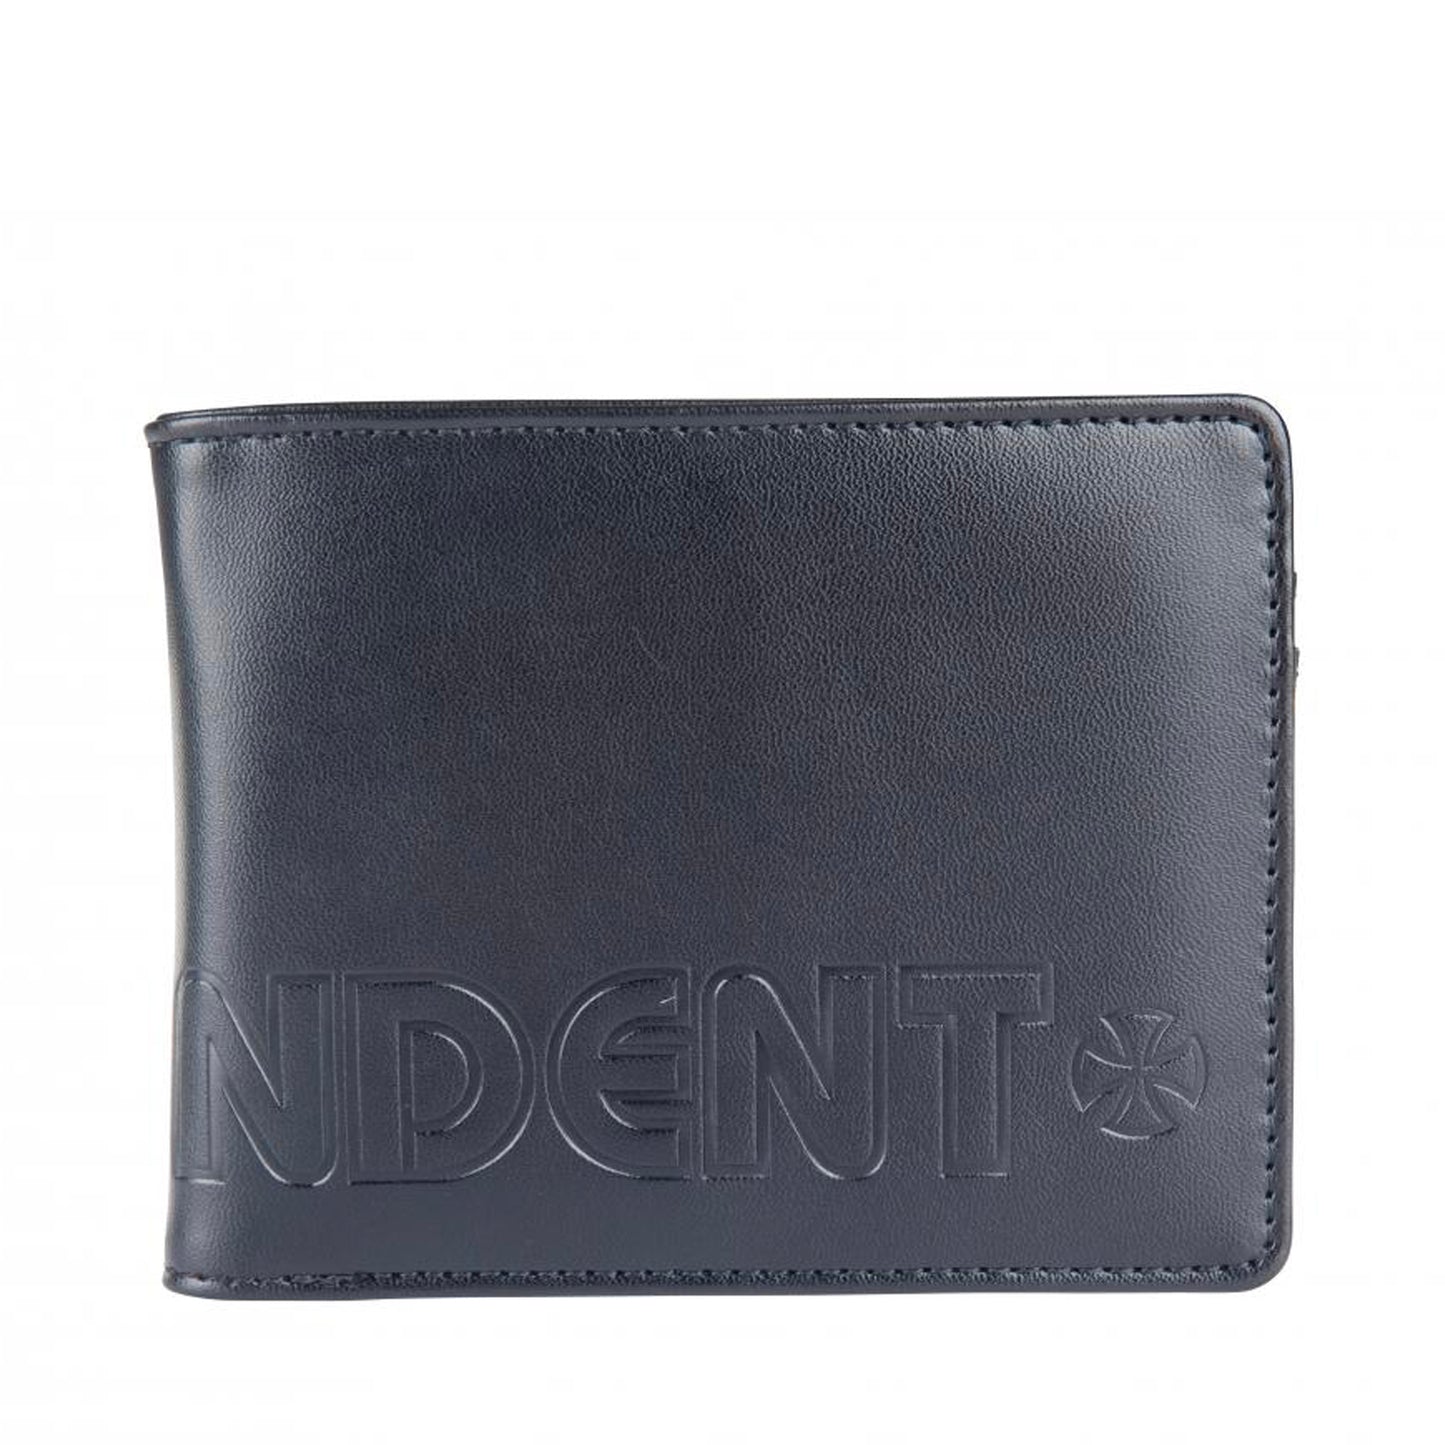 Independent Bar/Cross Wallet - Black Emboss - Prime Delux Store